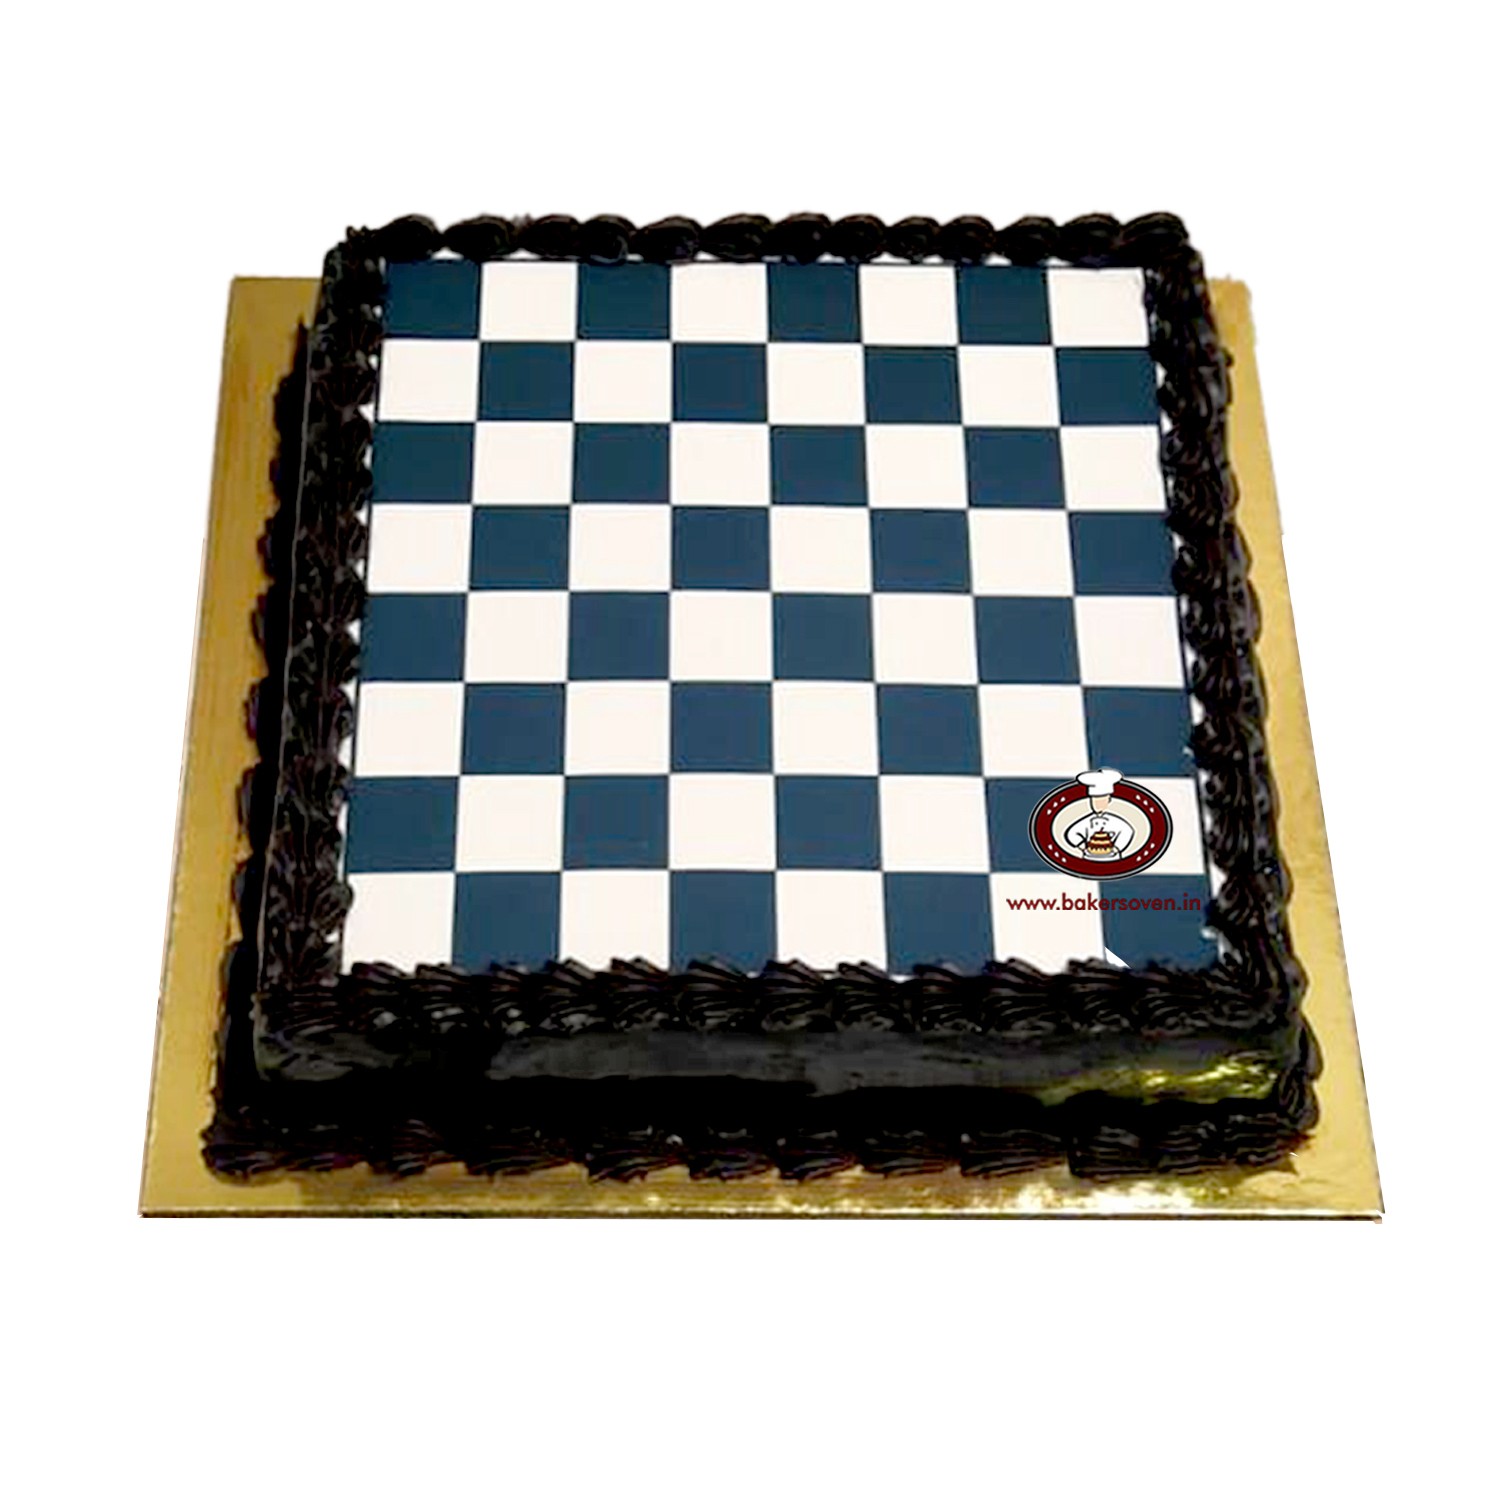 Chess Cake Chocolate Molds